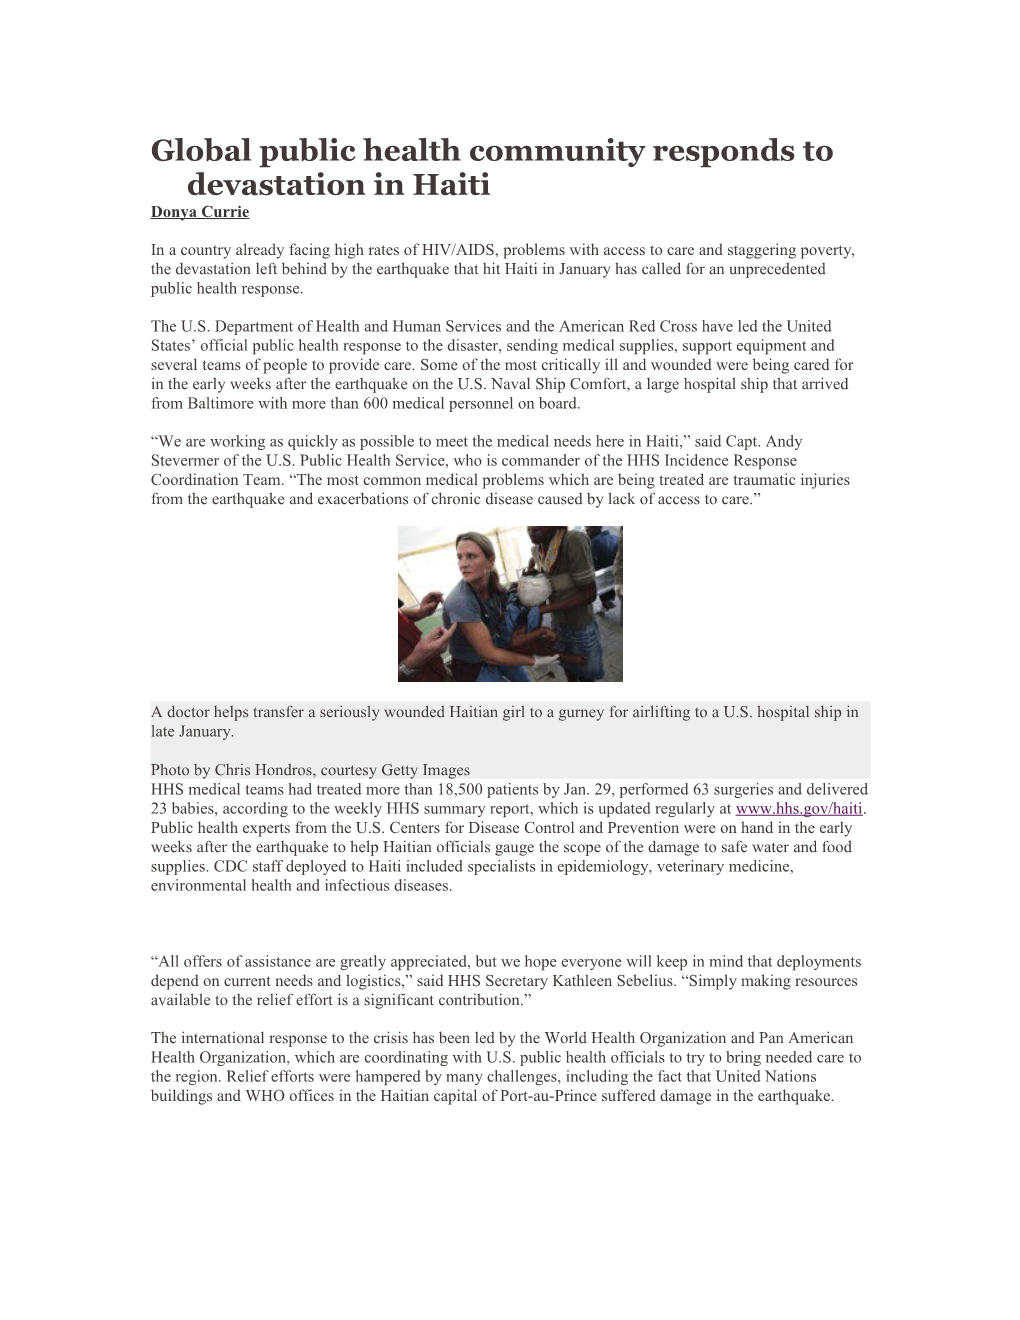 Global Public Health Community Responds to Devastation in Haiti